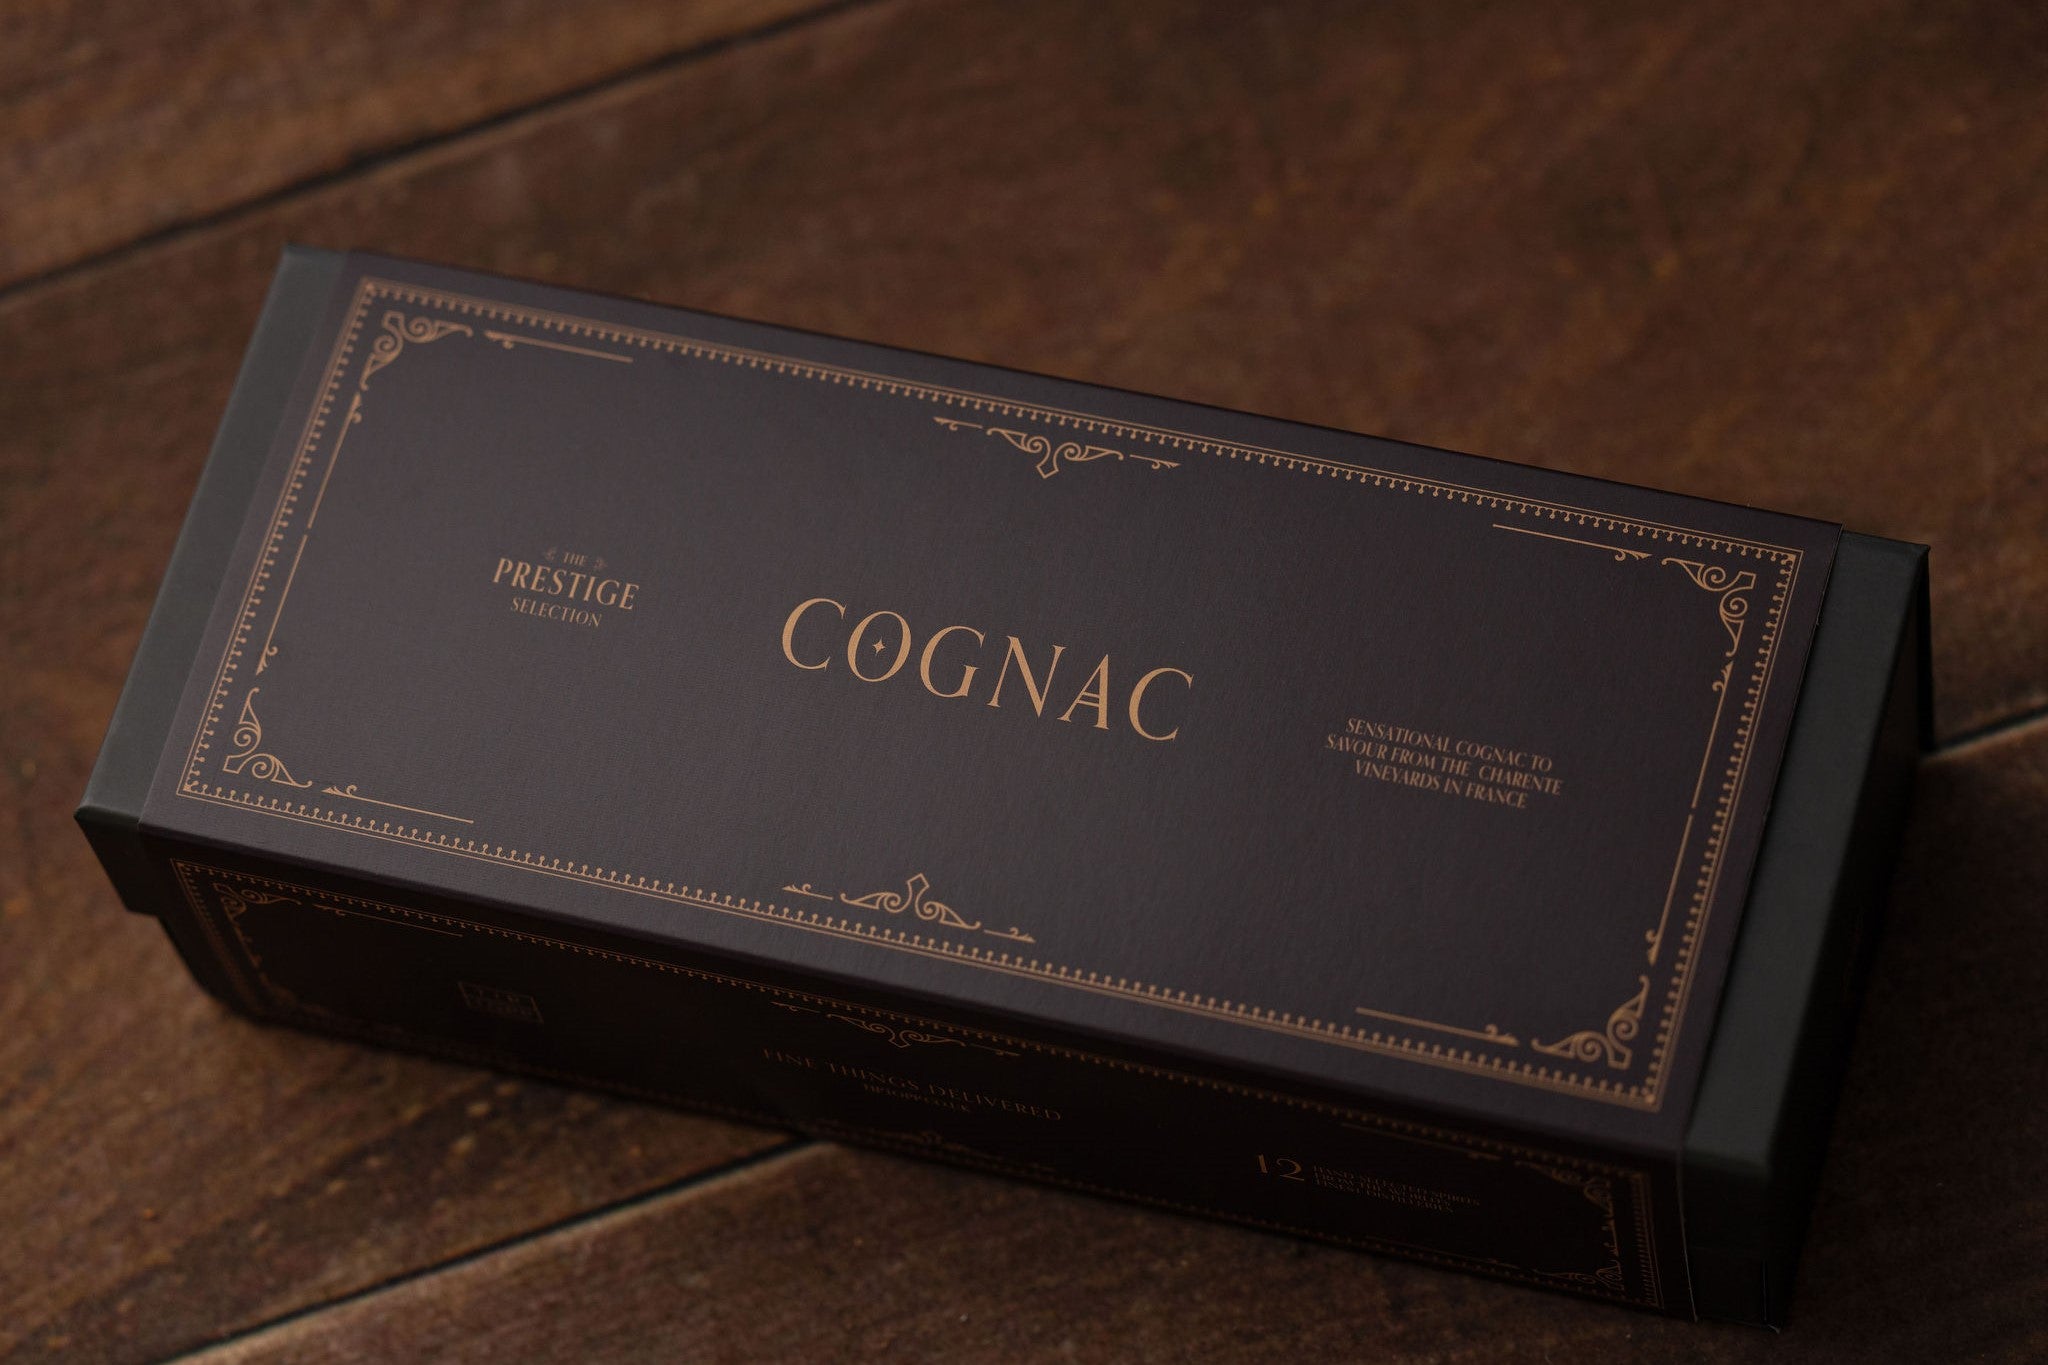 Buy The Cognac - The Spirit Co Set Selection Online Prestige Tasting The 